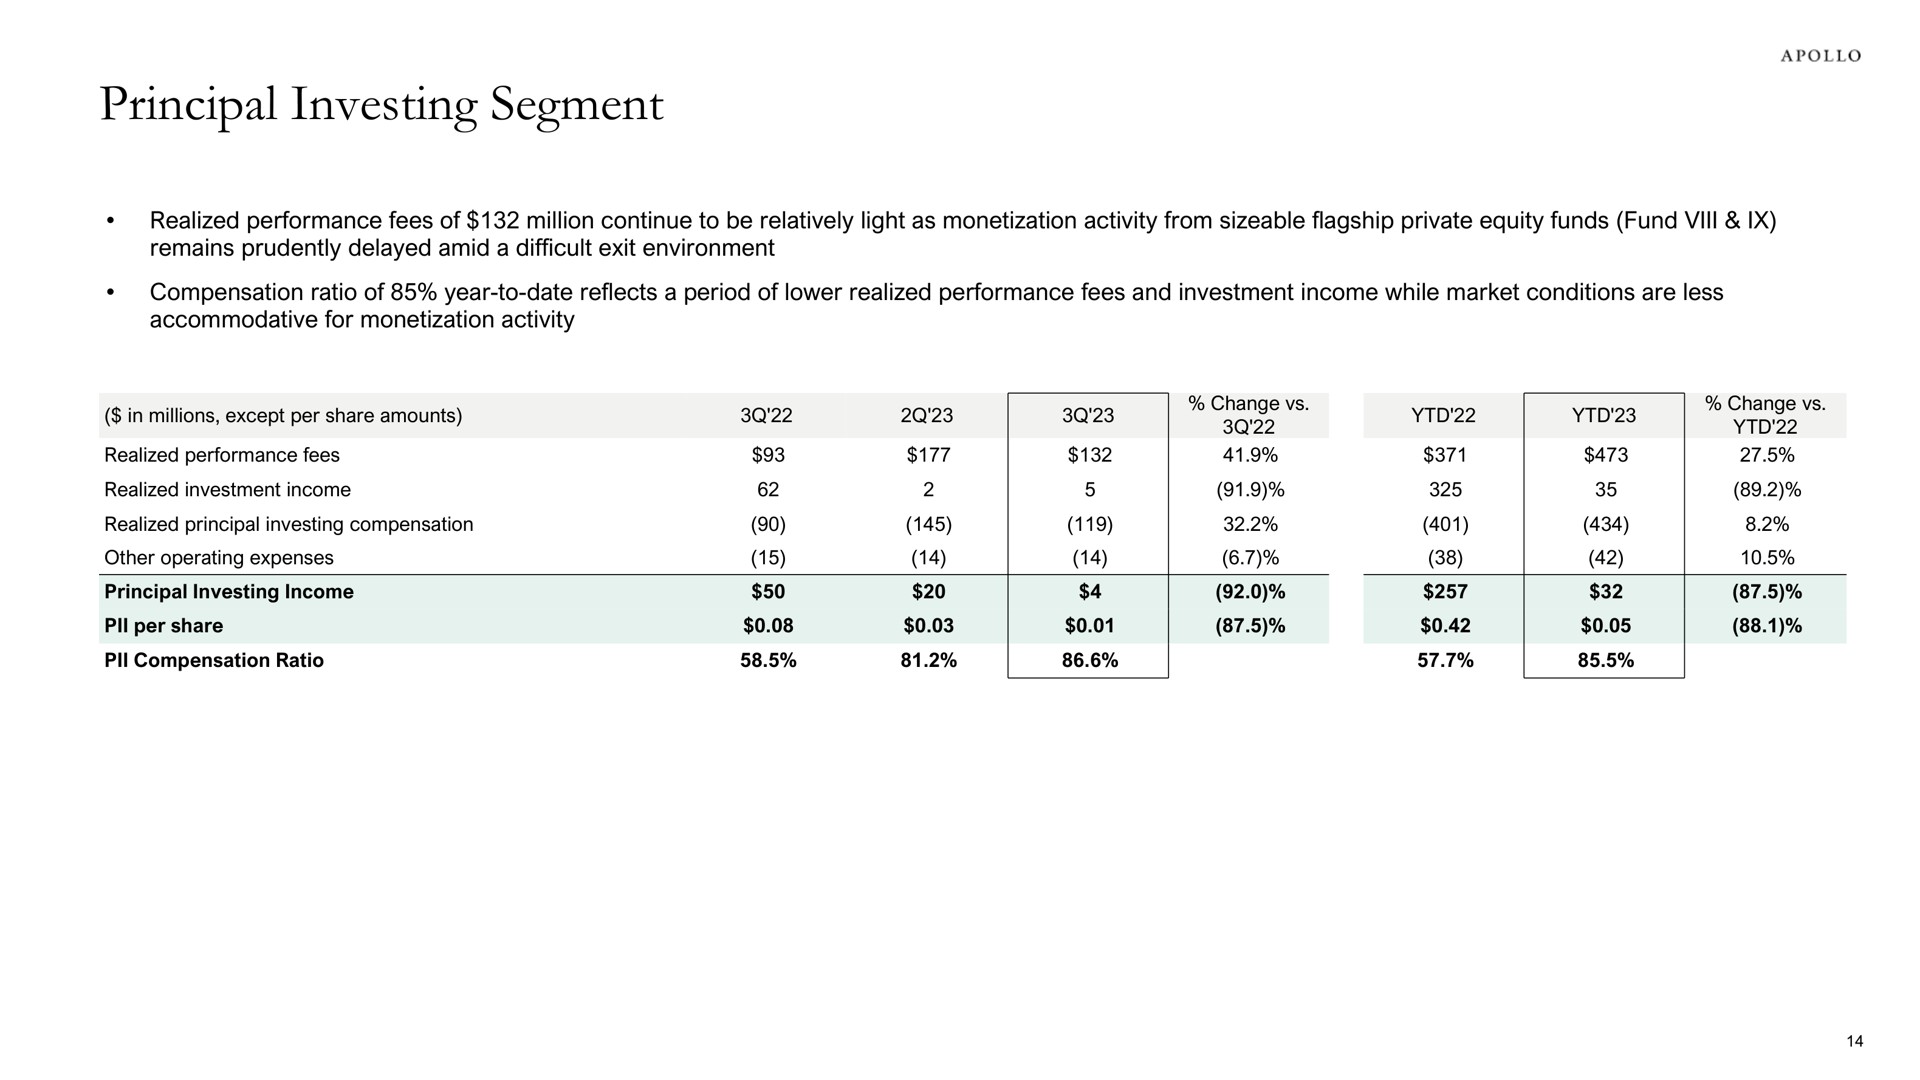 principal investing segment in millions except per share amounts | Apollo Global Management